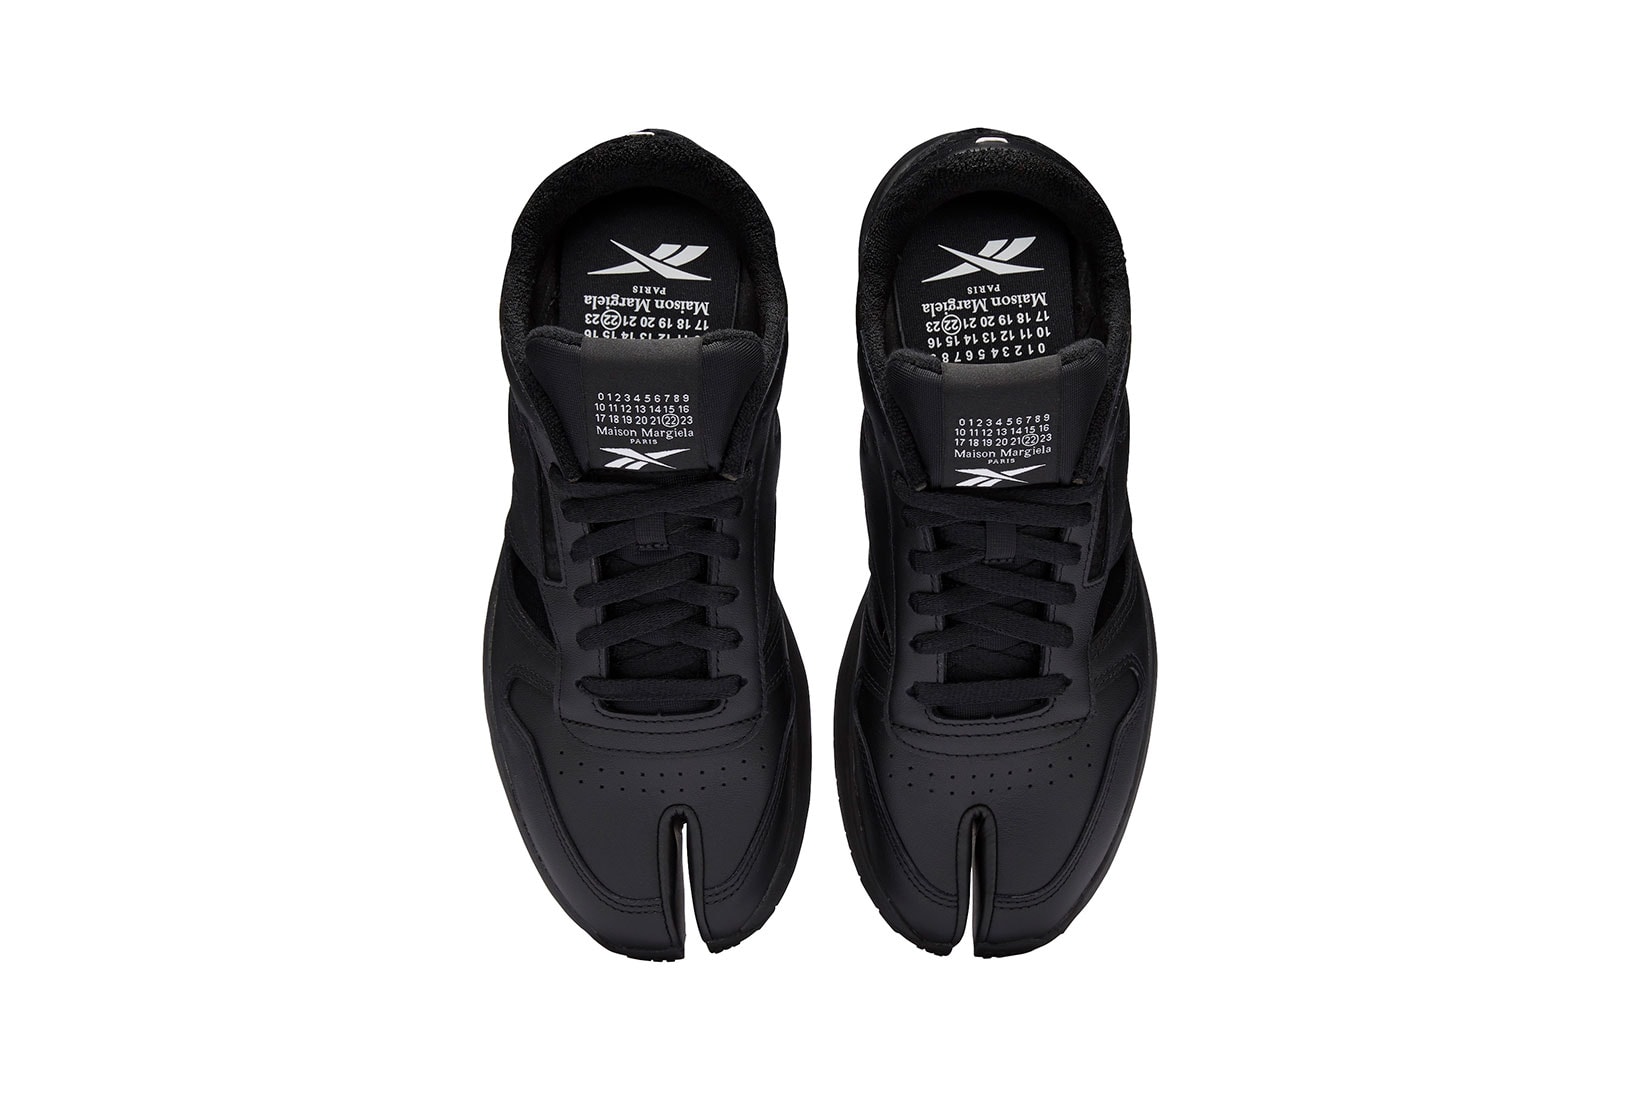 Maison Margiela Reebok Classic Leather Tabi Décortiqué Low Sneakers Footwear Collaboration 